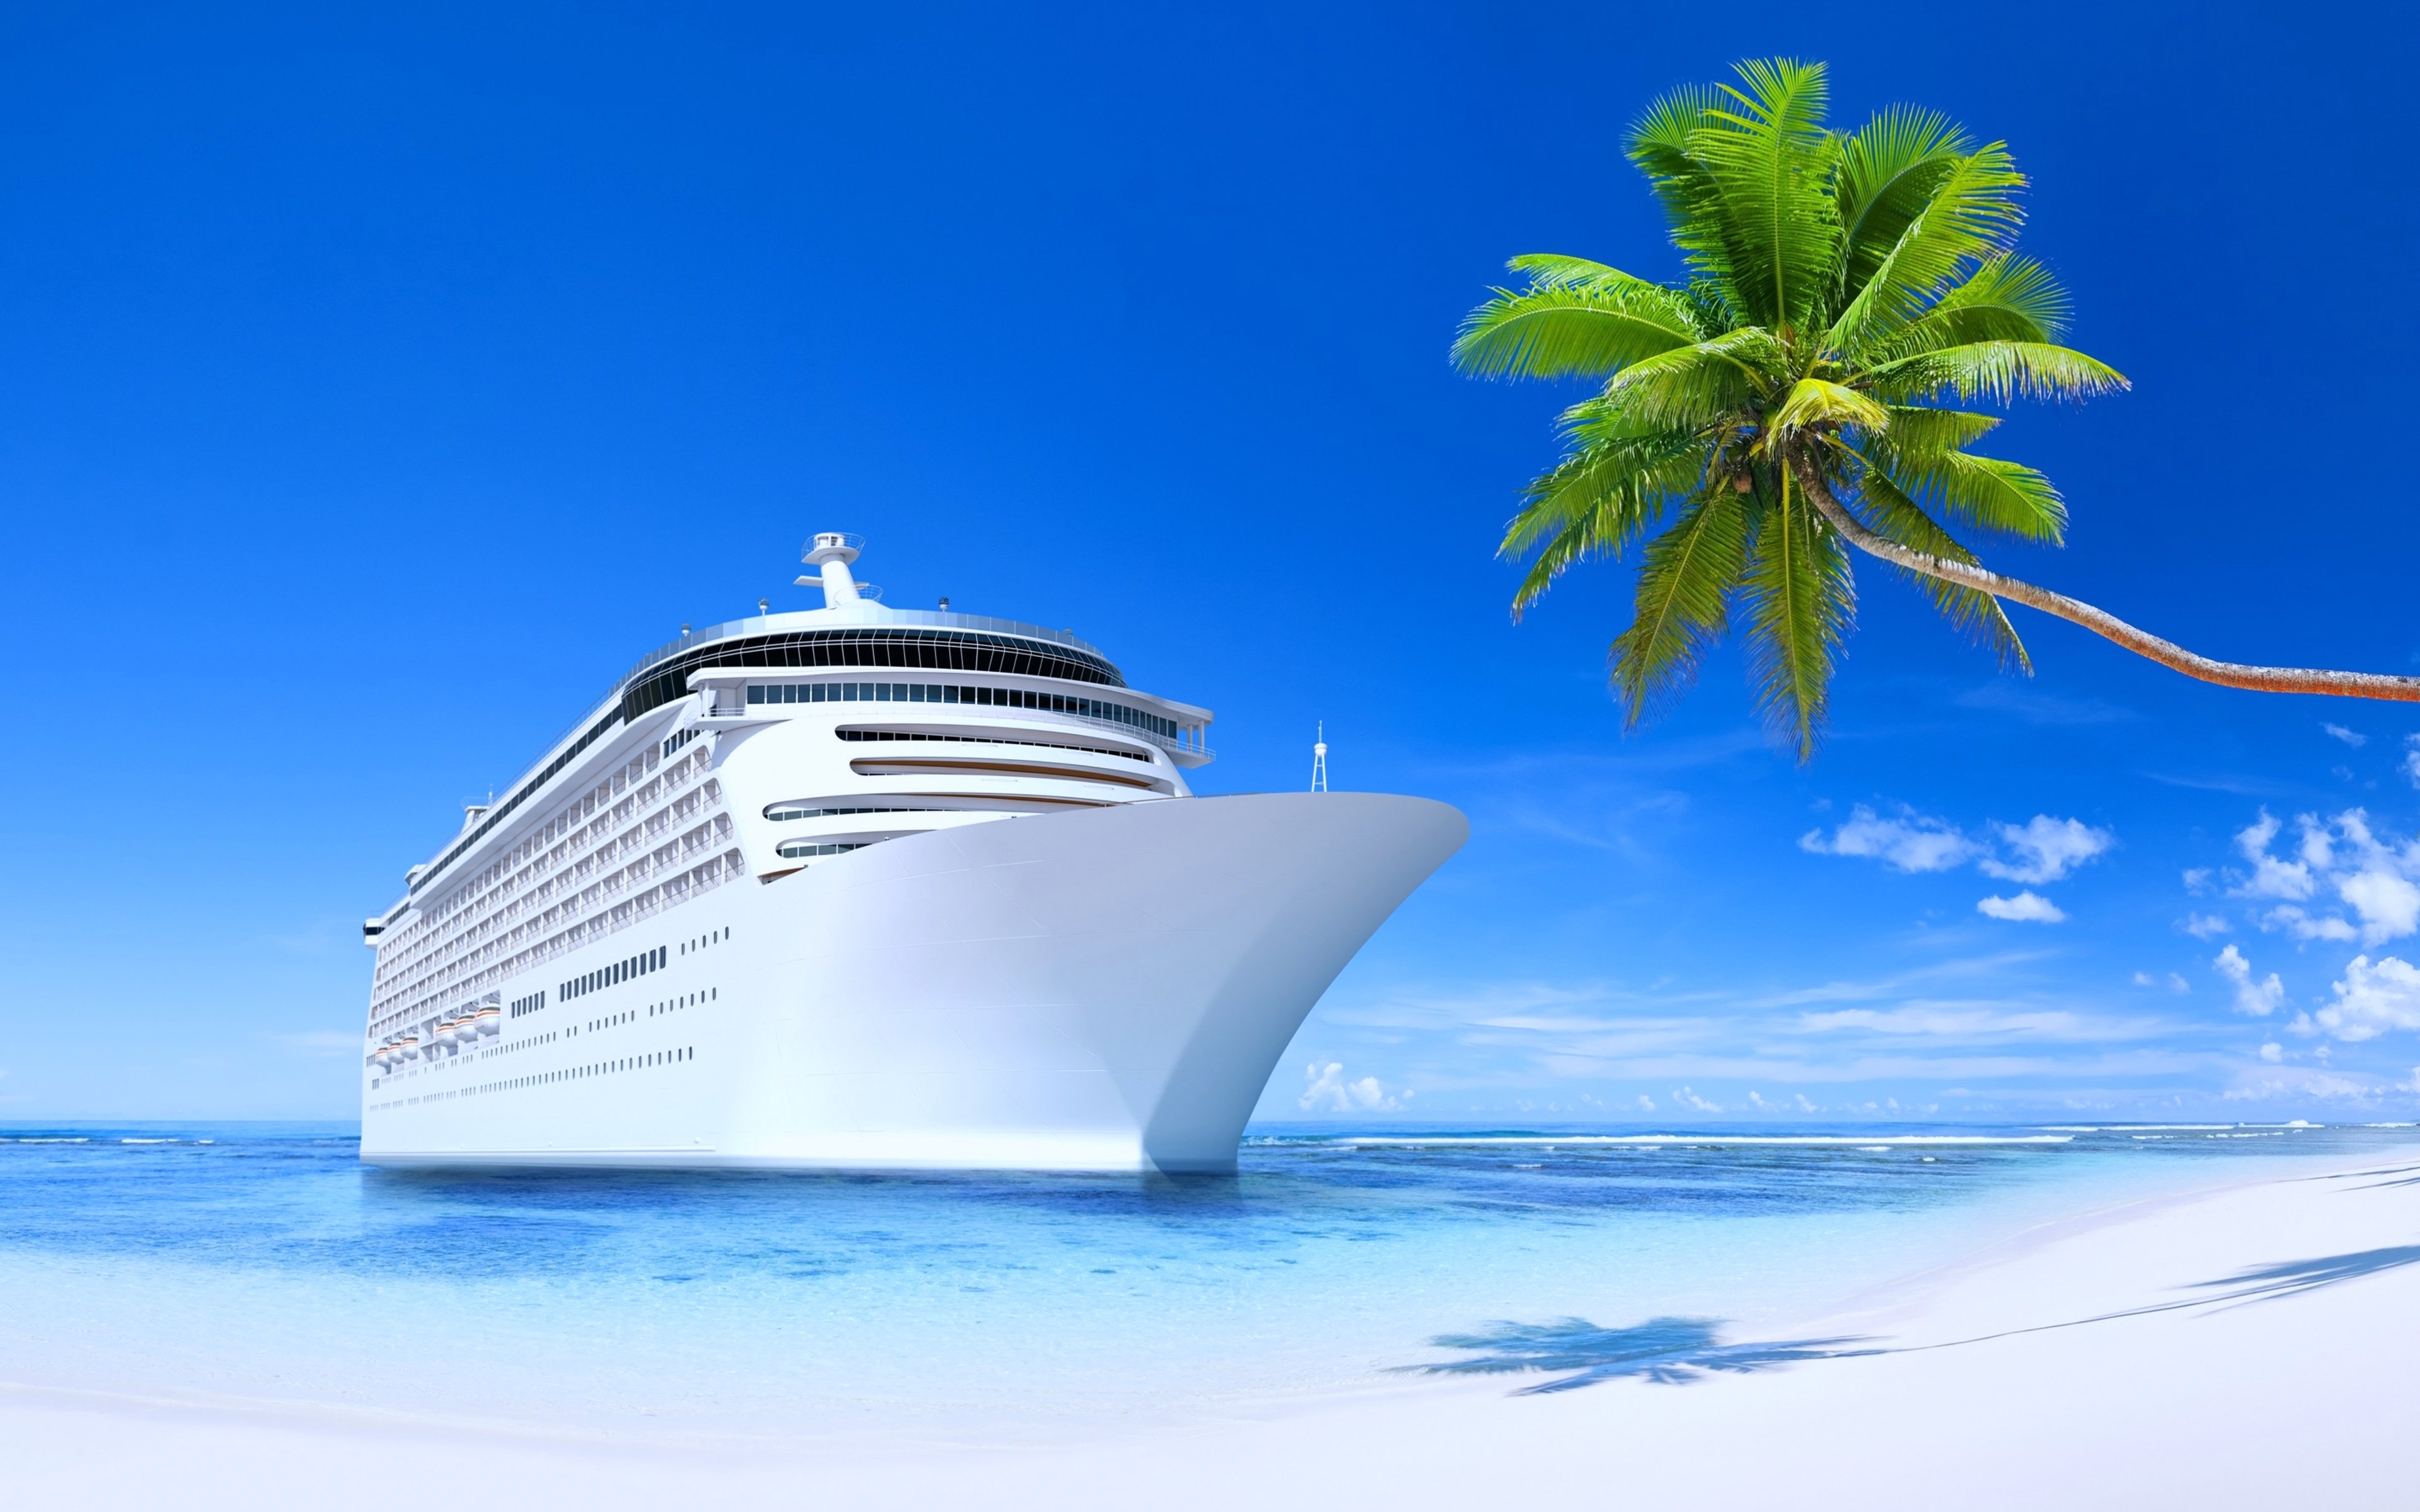 steamship, Ship, Tourism, Travel, Beach, Island, Sunny, Blue, Summer, Palms, Sand, Sea, Calm, Beautiful, White, Sky Wallpaper